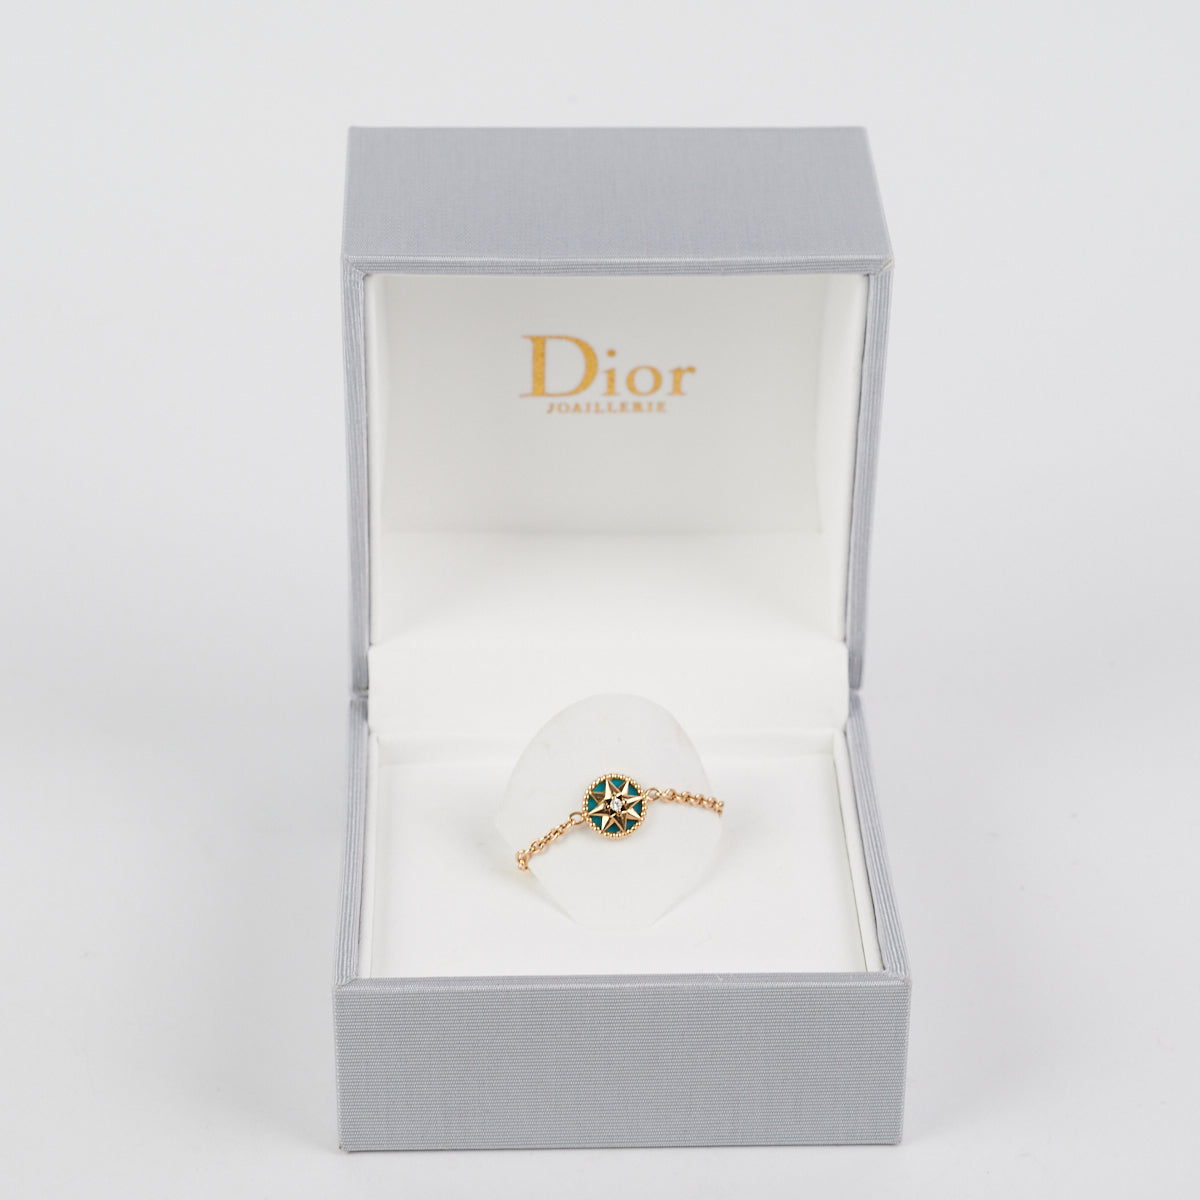 AntiqueVINTAGE Christian Dior Gray Velvet MidCentury Jewelry BoxLarge   eBay